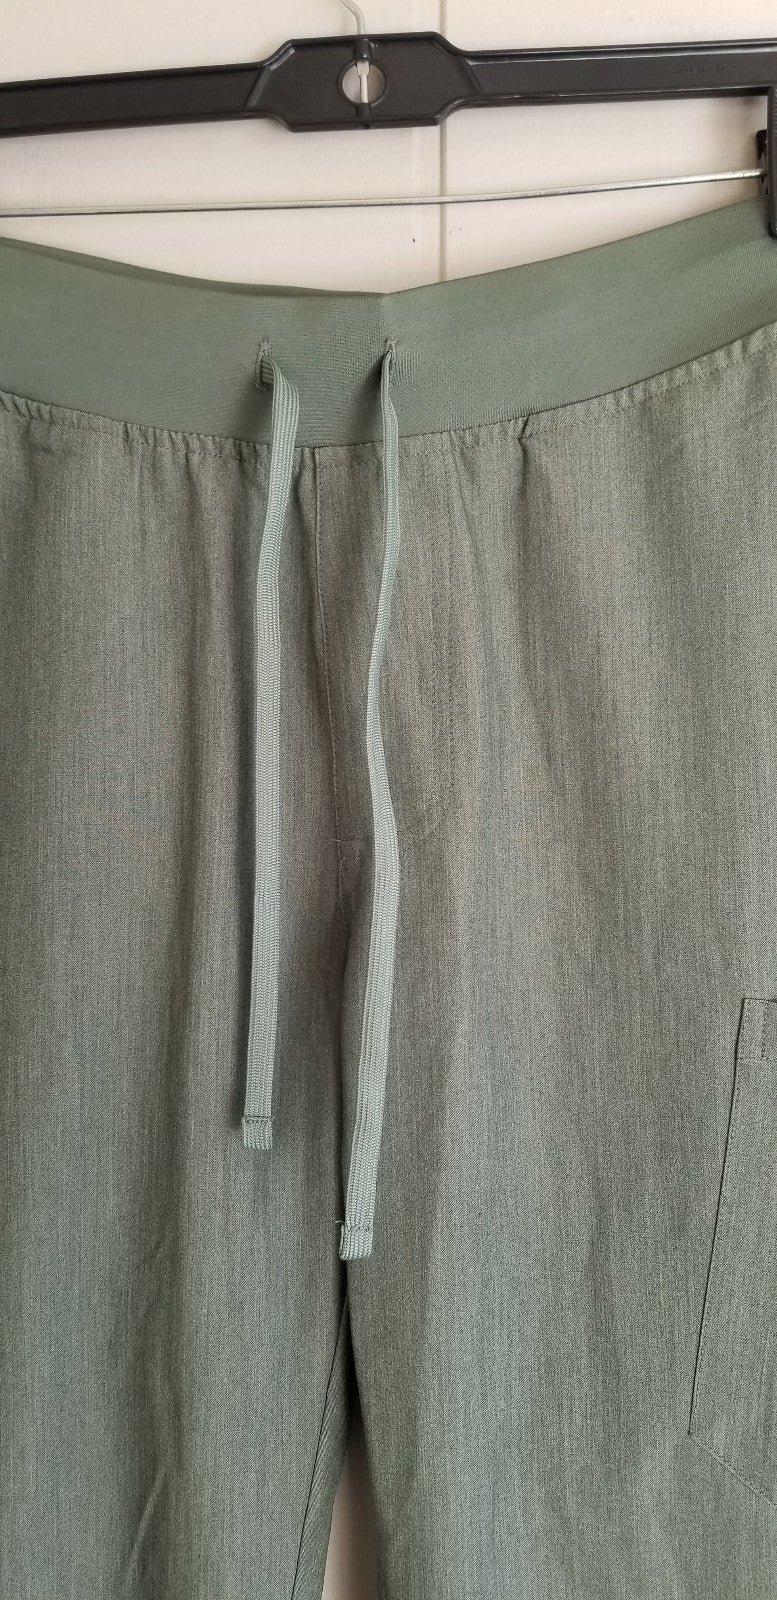 Classic Mandala Scrub Pants Women Size Tall Medium Green Drawstring Pockets n8NkttJpq just for you